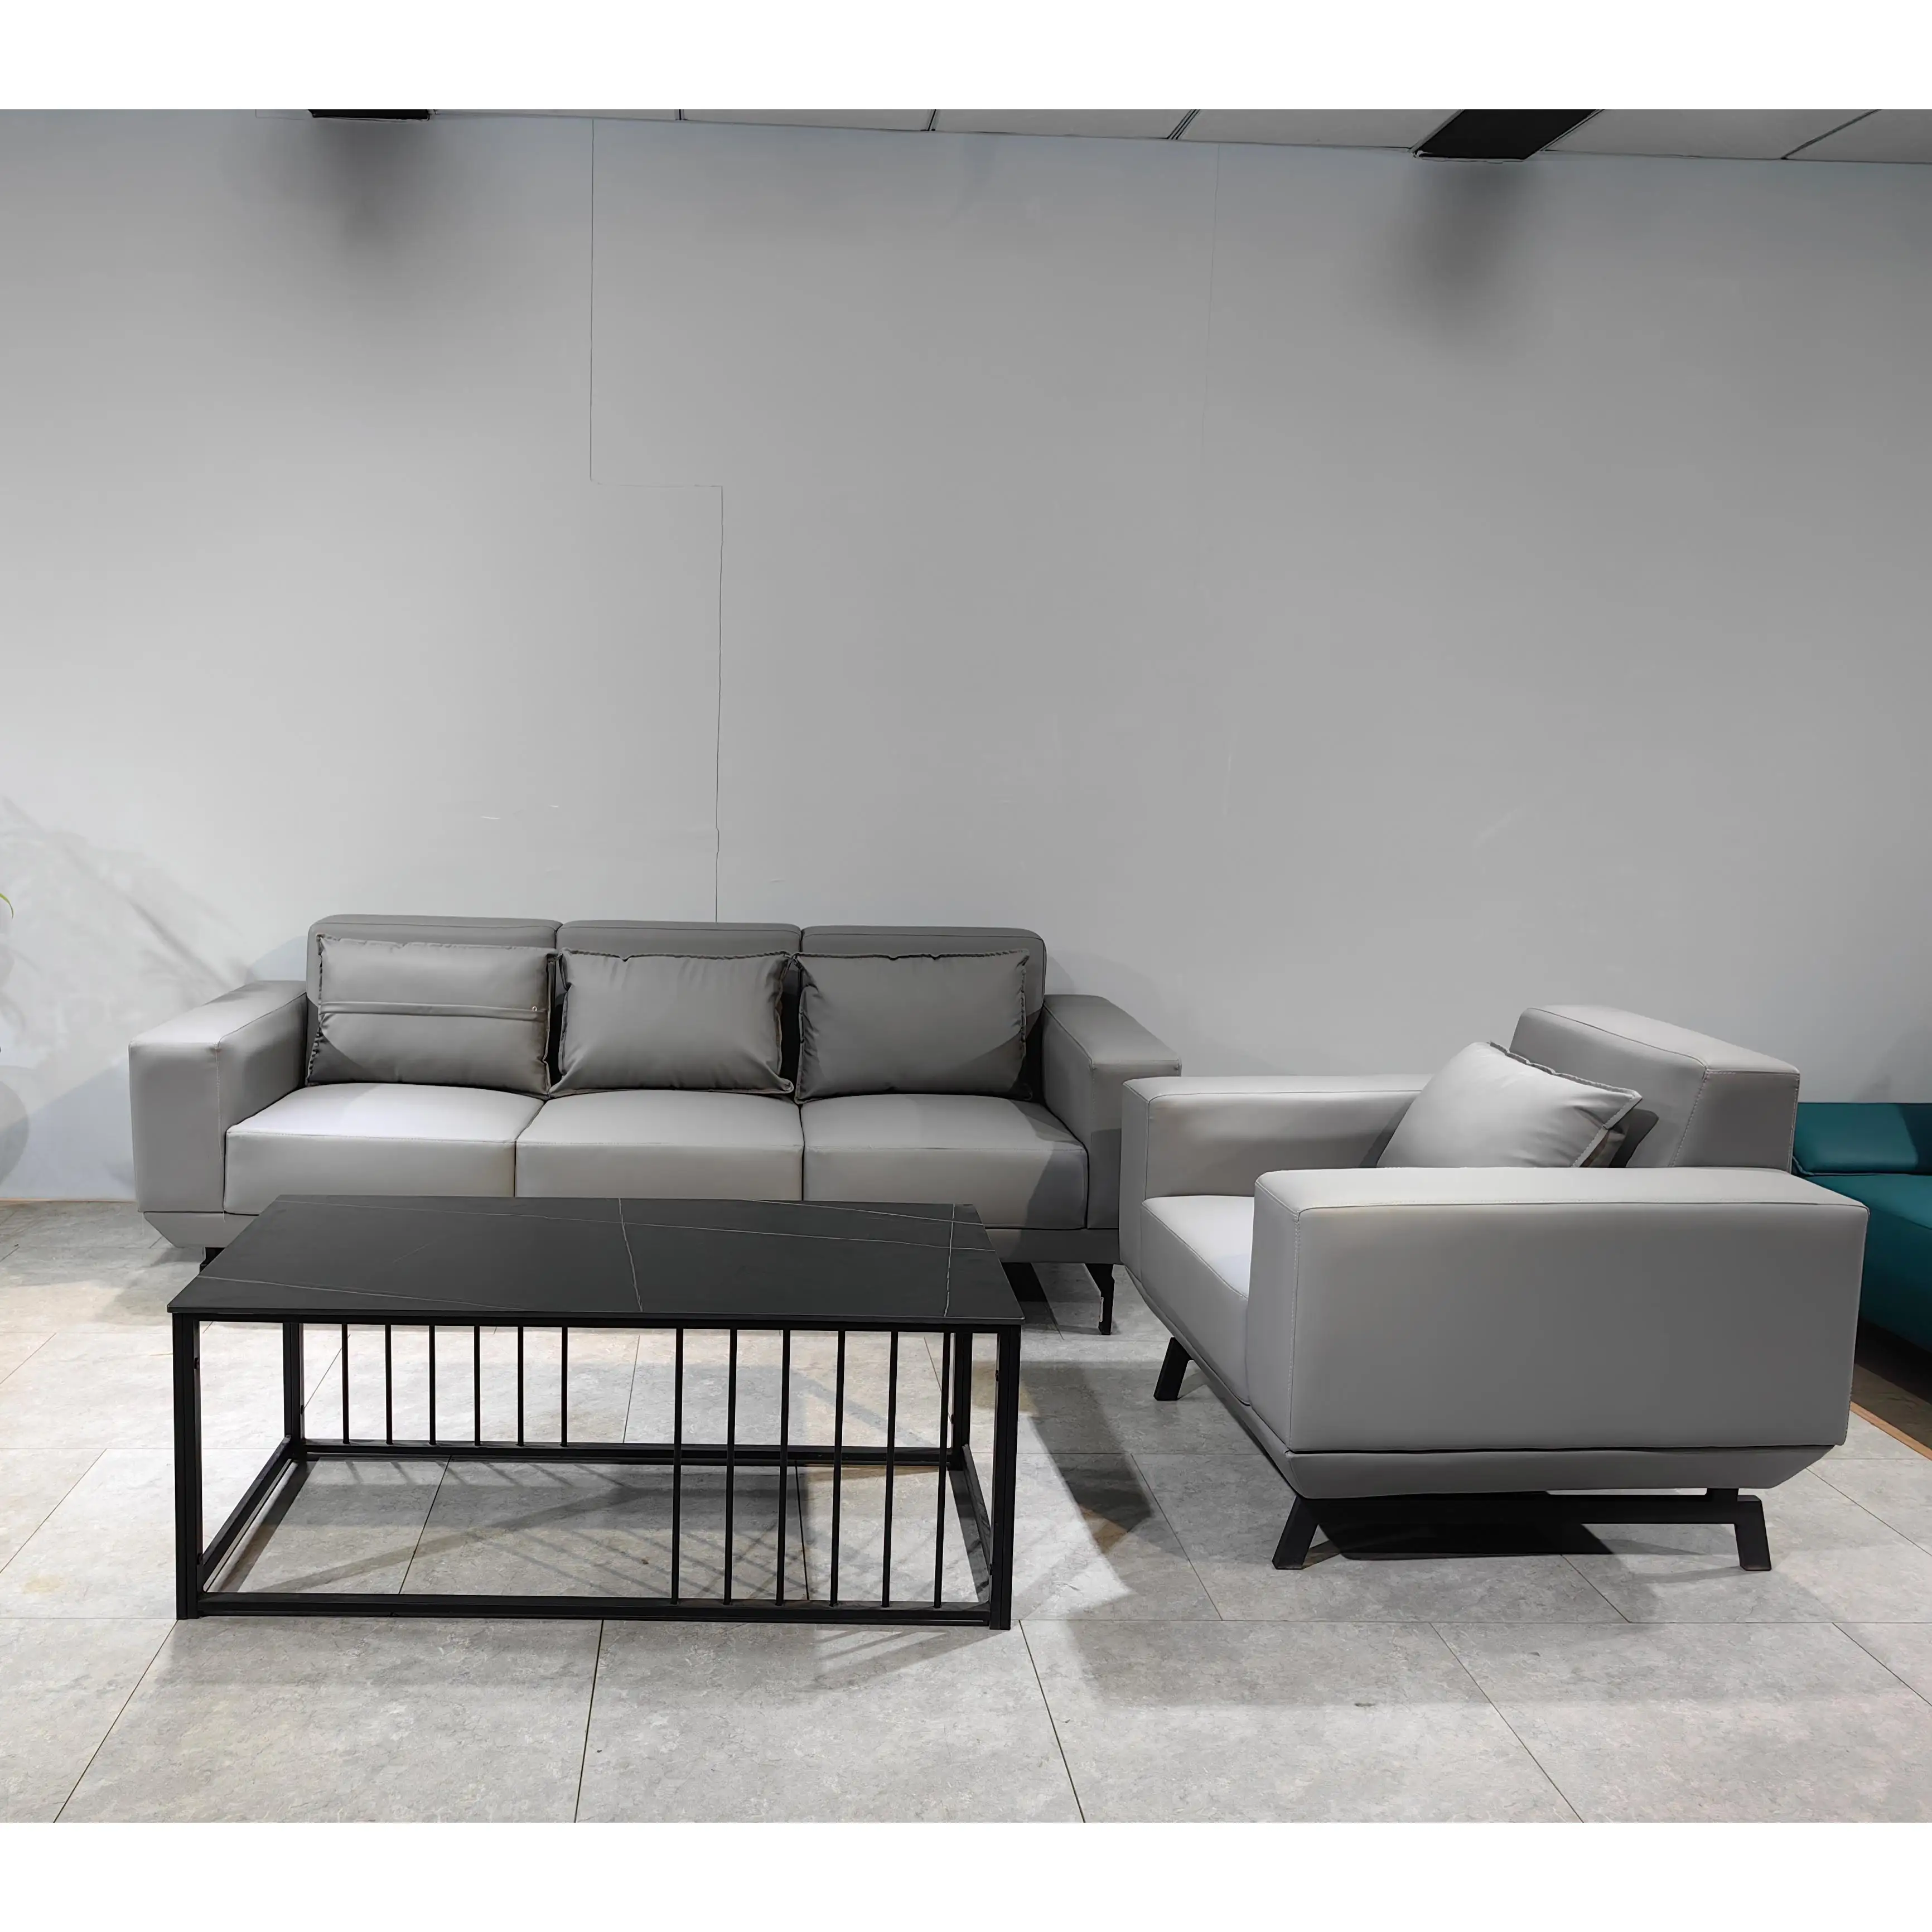 Penjualan Langsung Pabrik Set Potongan Sofa Kombinasi Bahan Pu Aula Perjamuan Keluarga